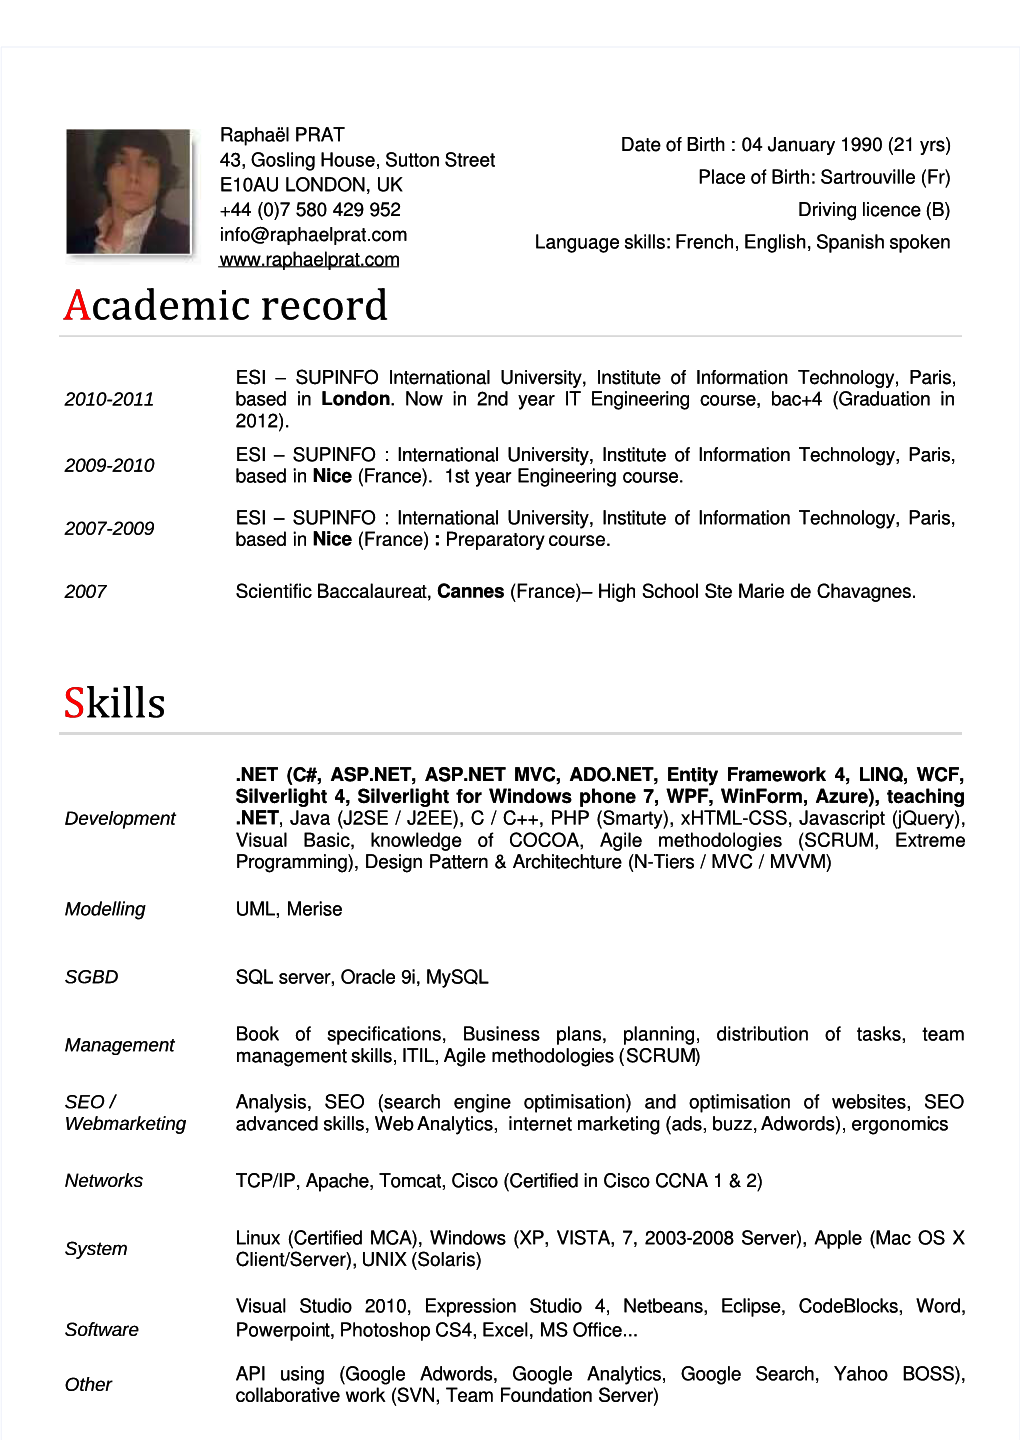 Academic Record Skills